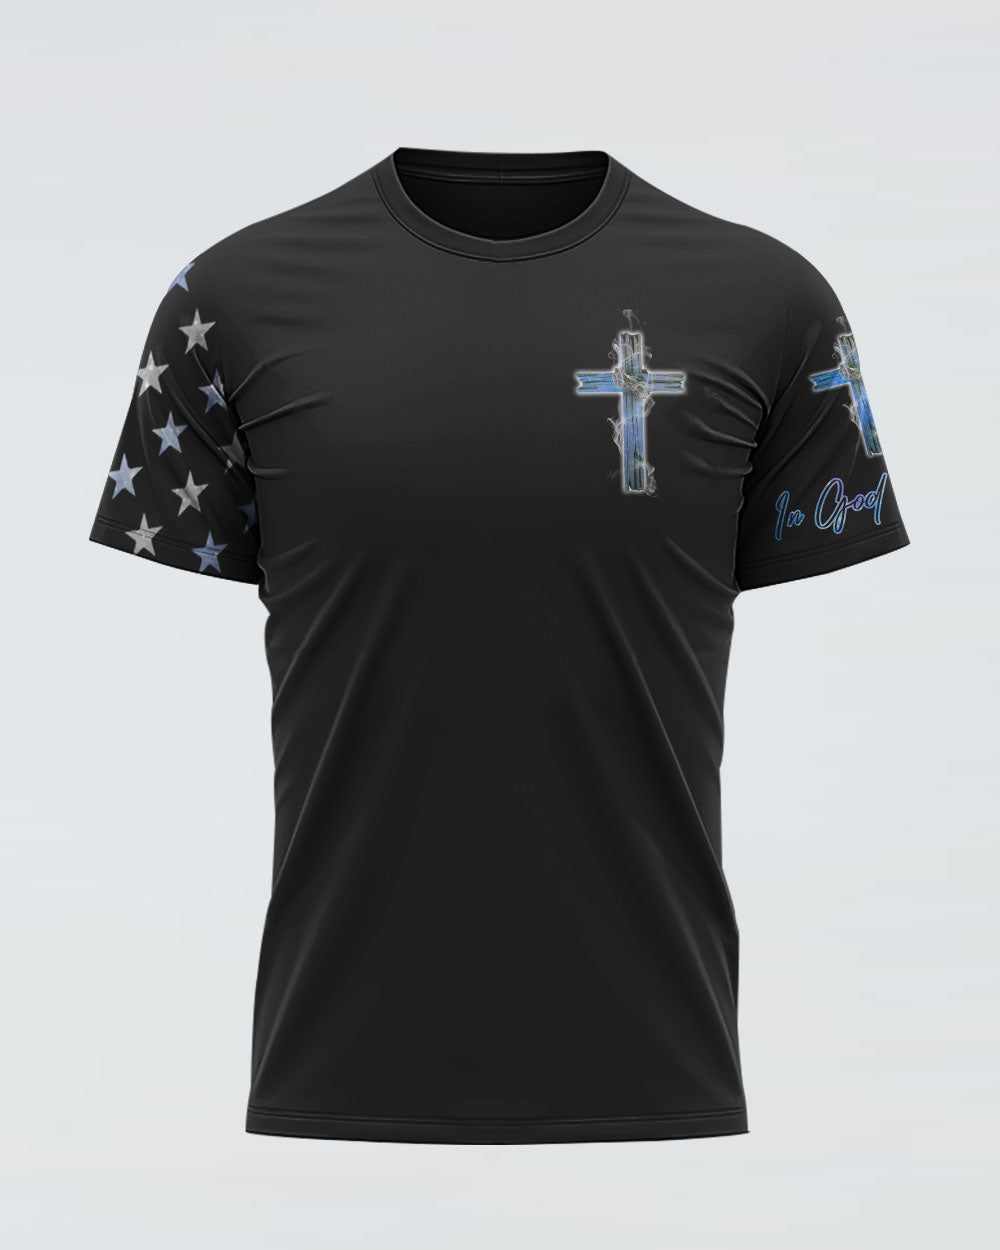 Faith Jesus Cross Galaxy Flag Women's Christian Tshirt